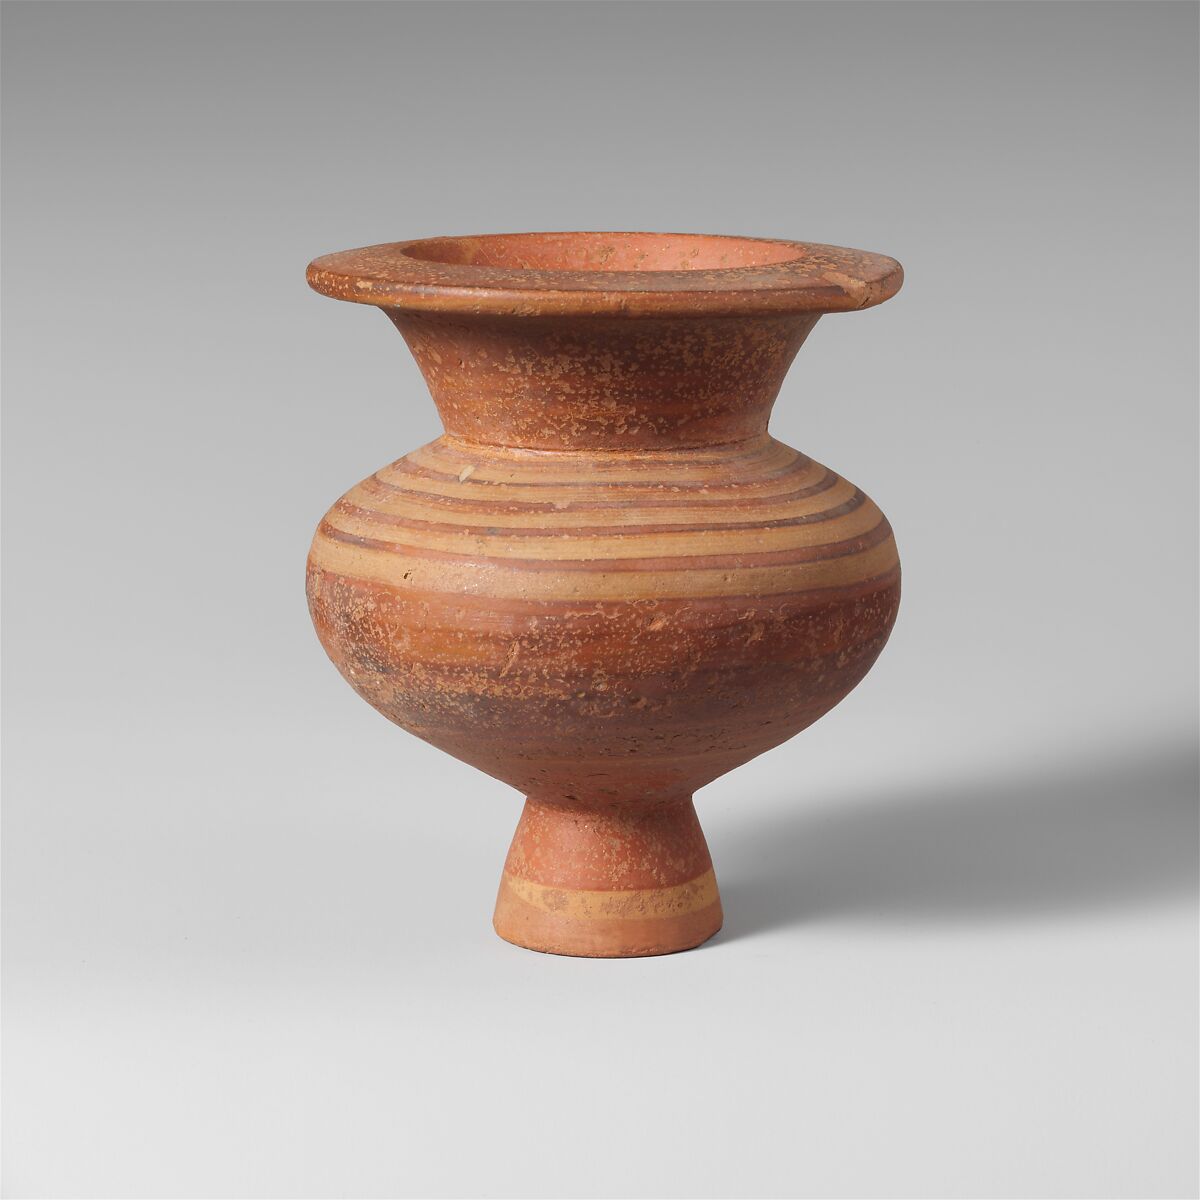 Terracotta lydion (perfume jar), Terracotta, Lydian